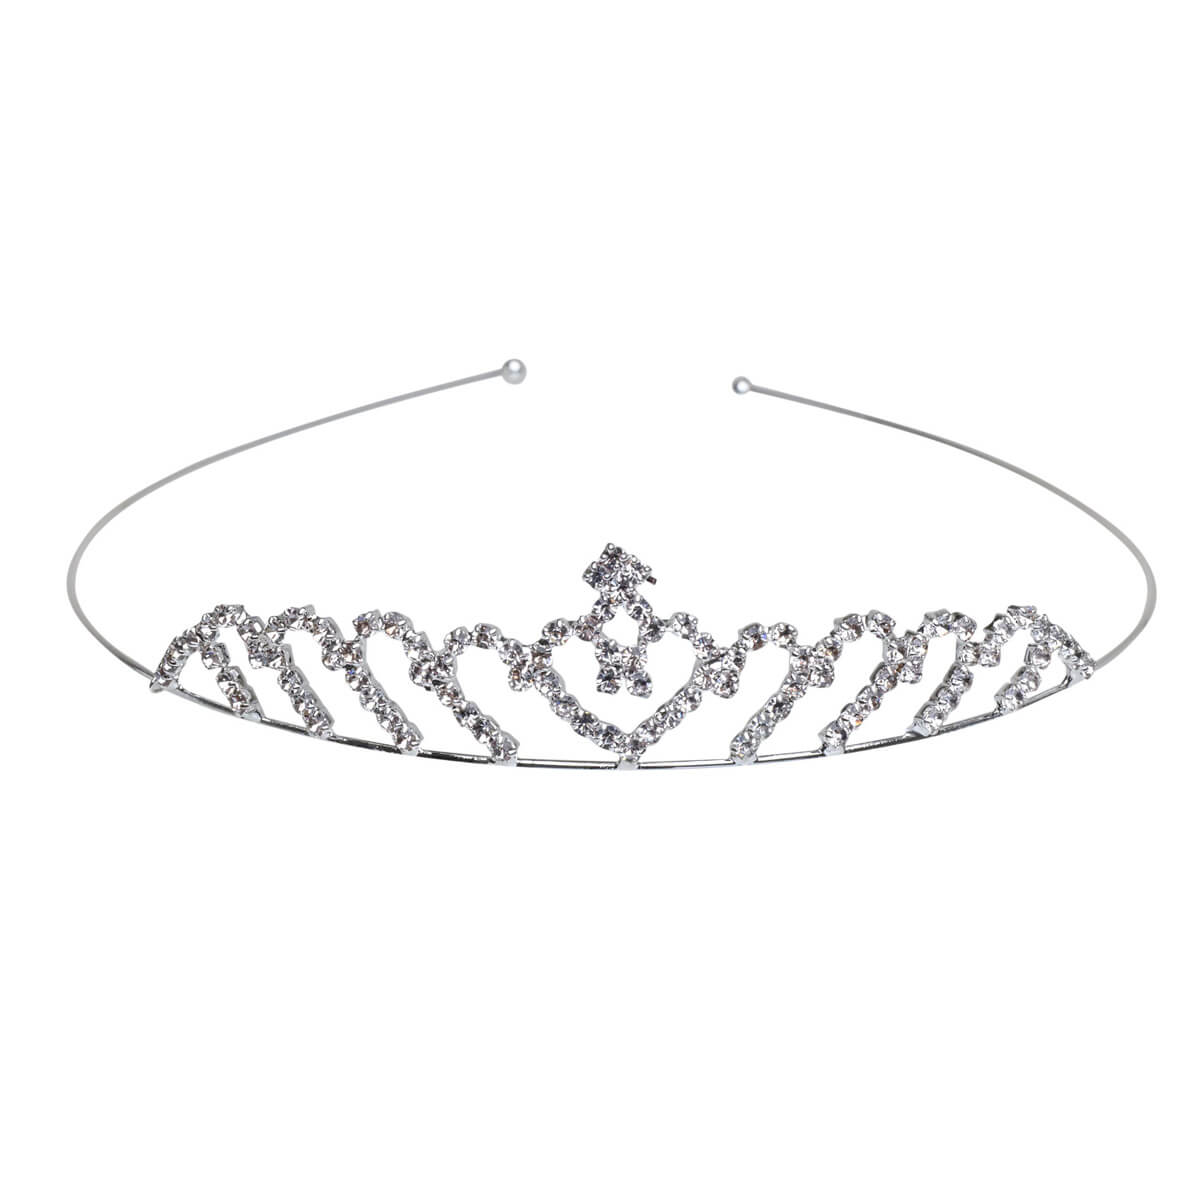 Graceful tiara hairband